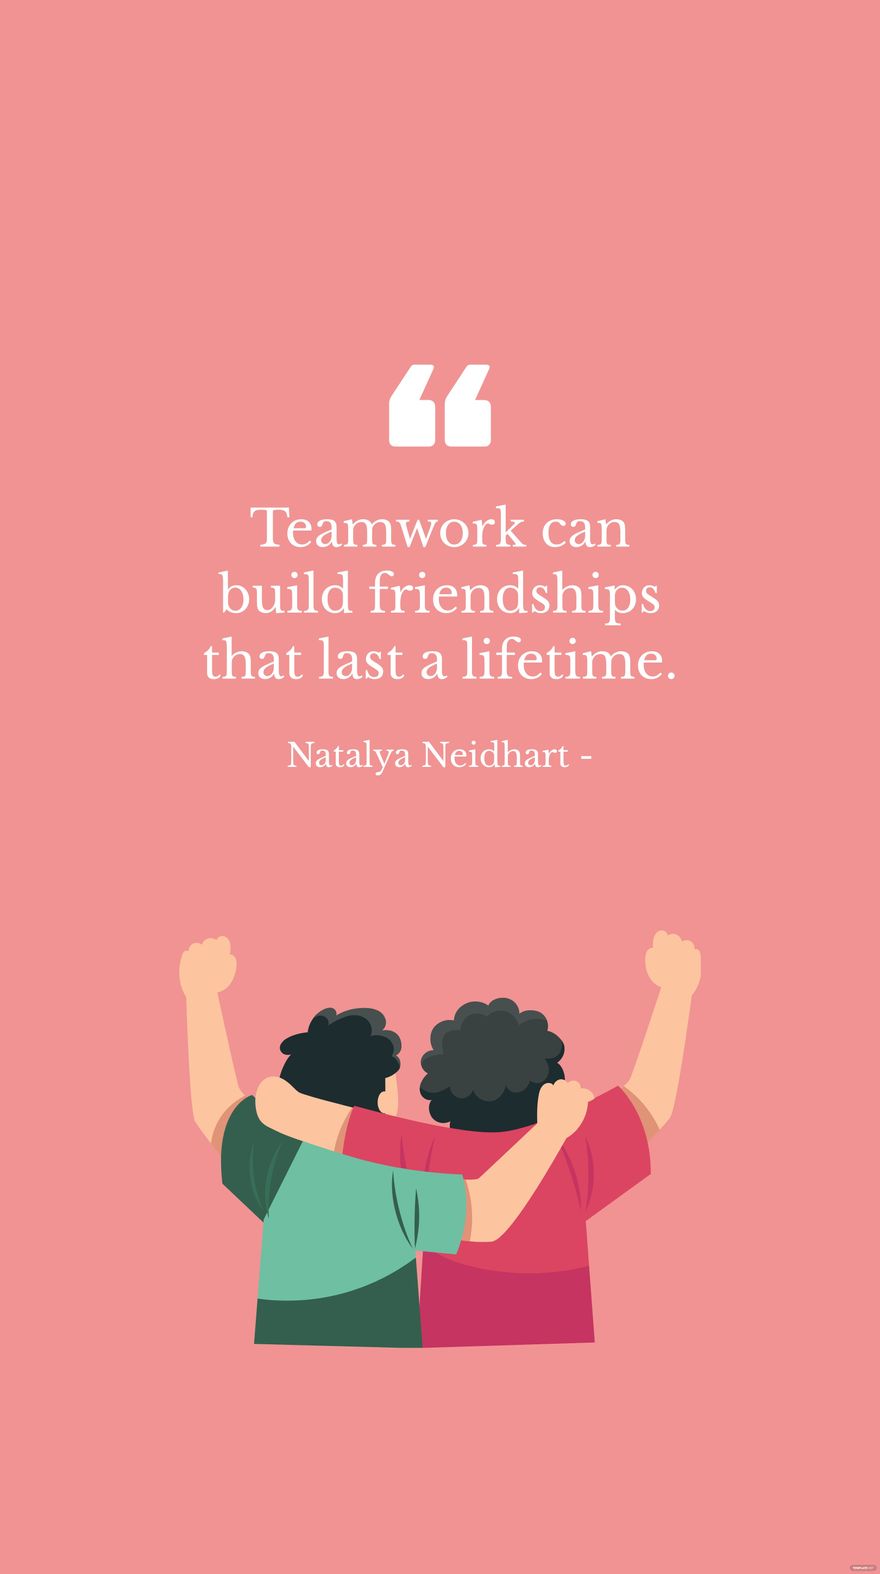 Natalya Neidhart - Teamwork can build friendships that last a lifetime.